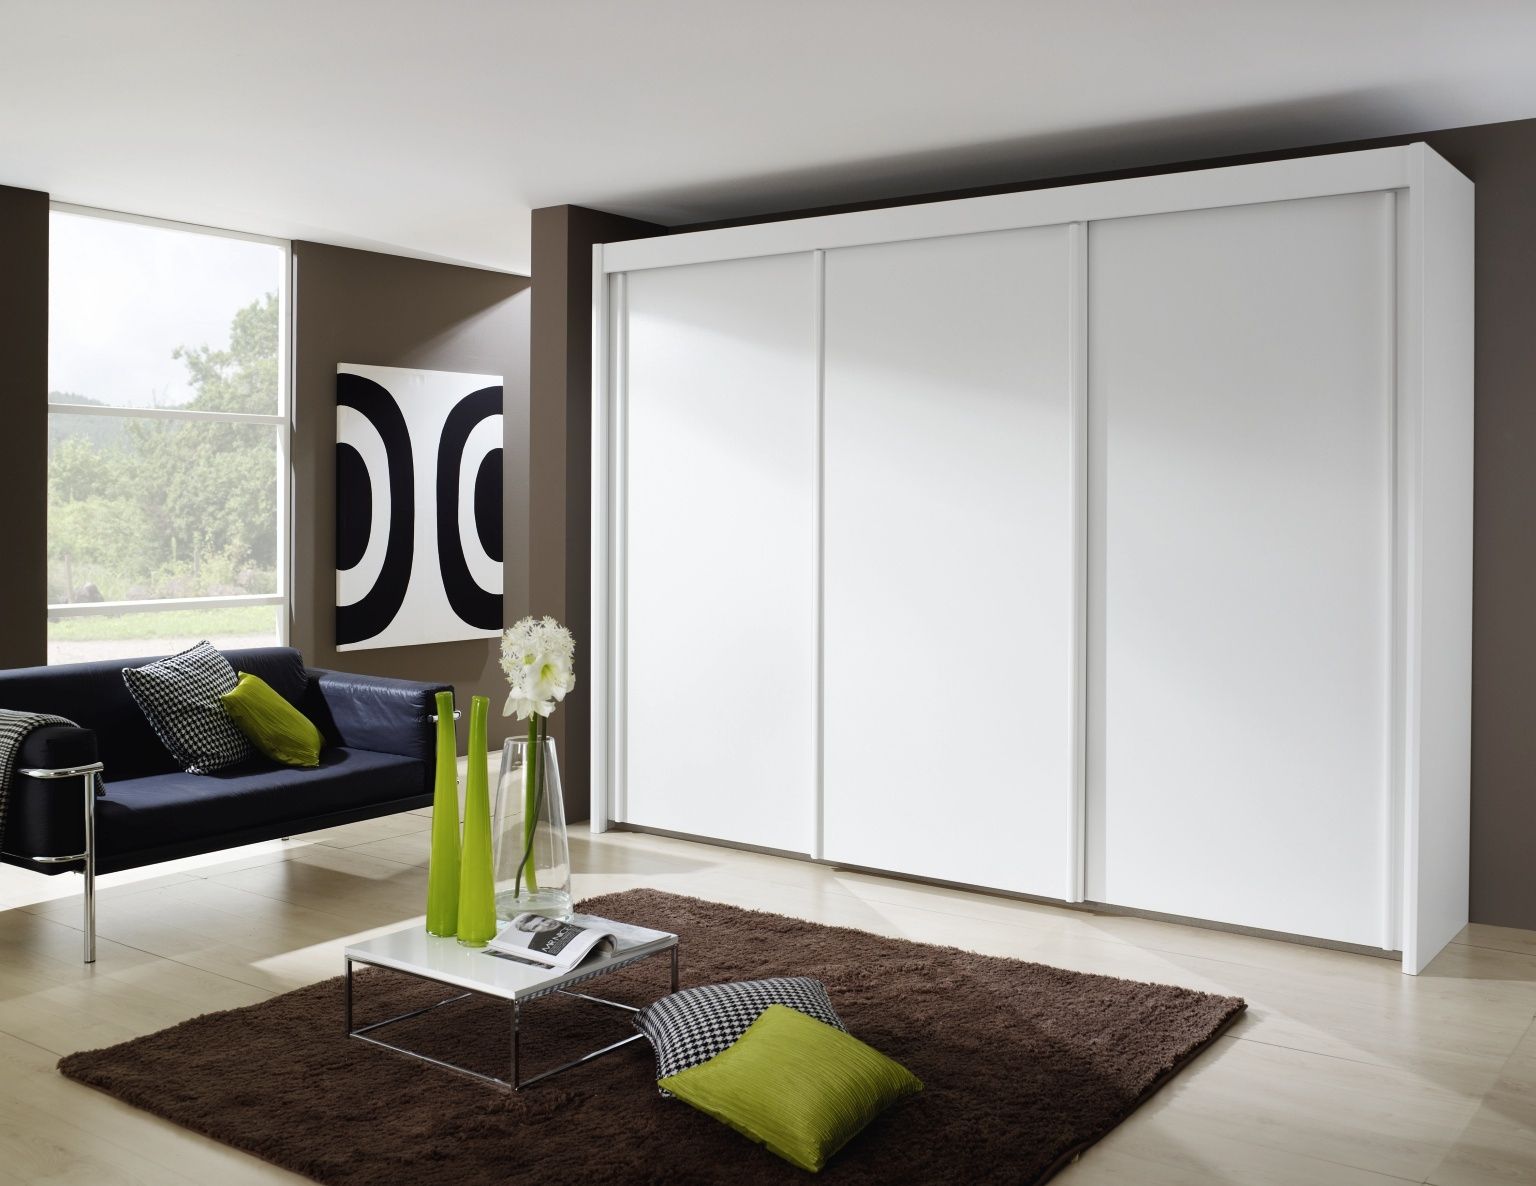 Rauch Imperial 3 Door Sliding Wardrobe In White – W 280cm – Cfs Furniture Uk Within White 3 Door Wardrobes (View 14 of 19)